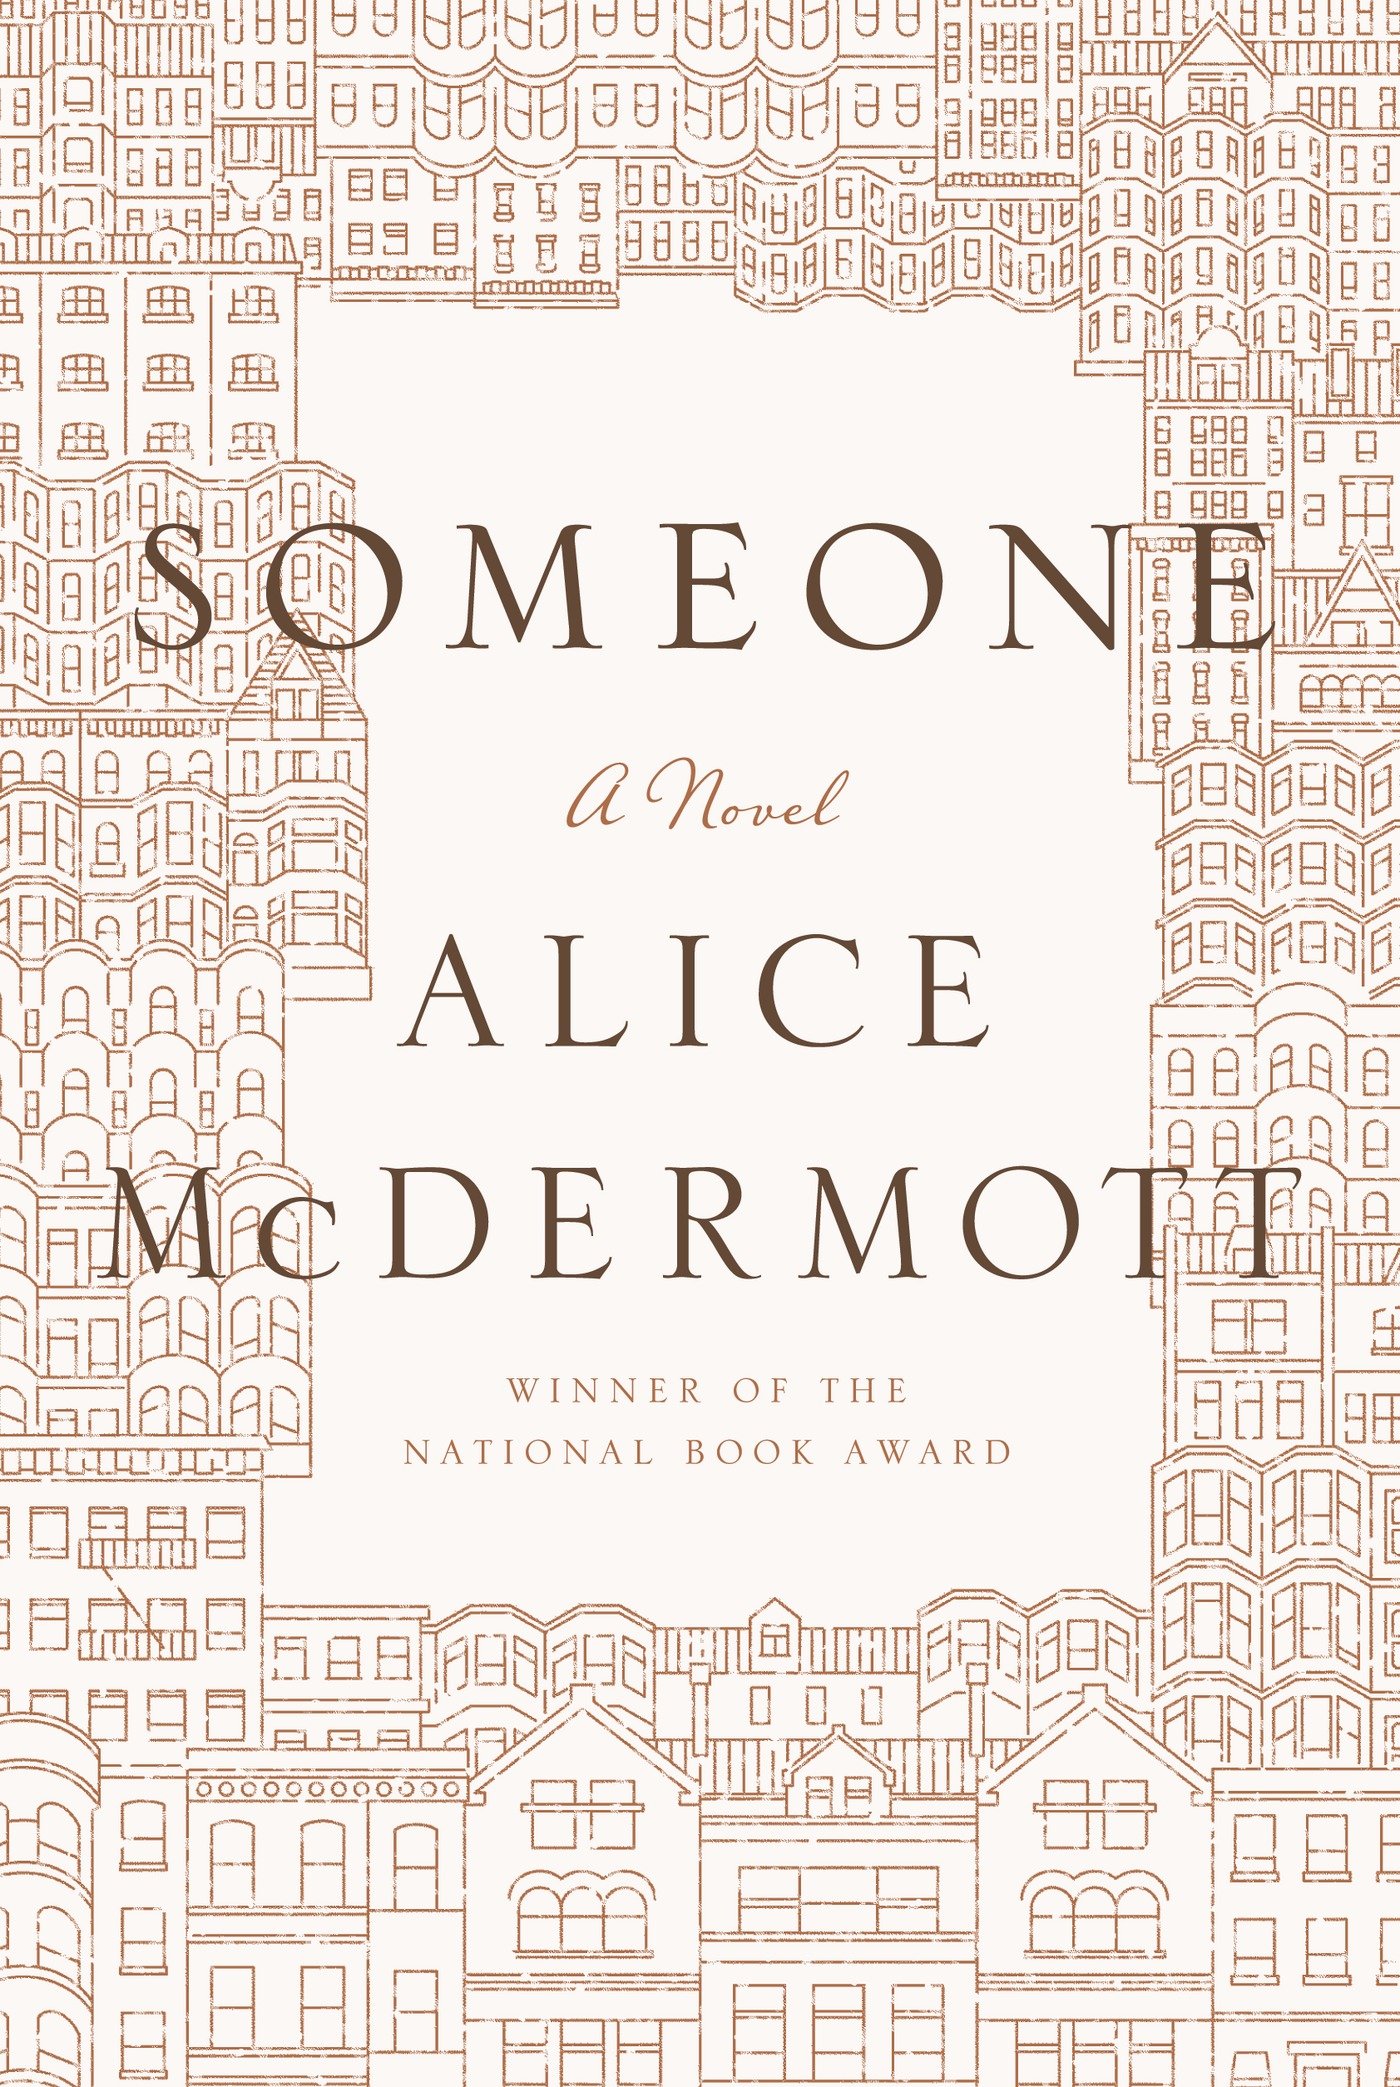 Someone by Alice McDermott